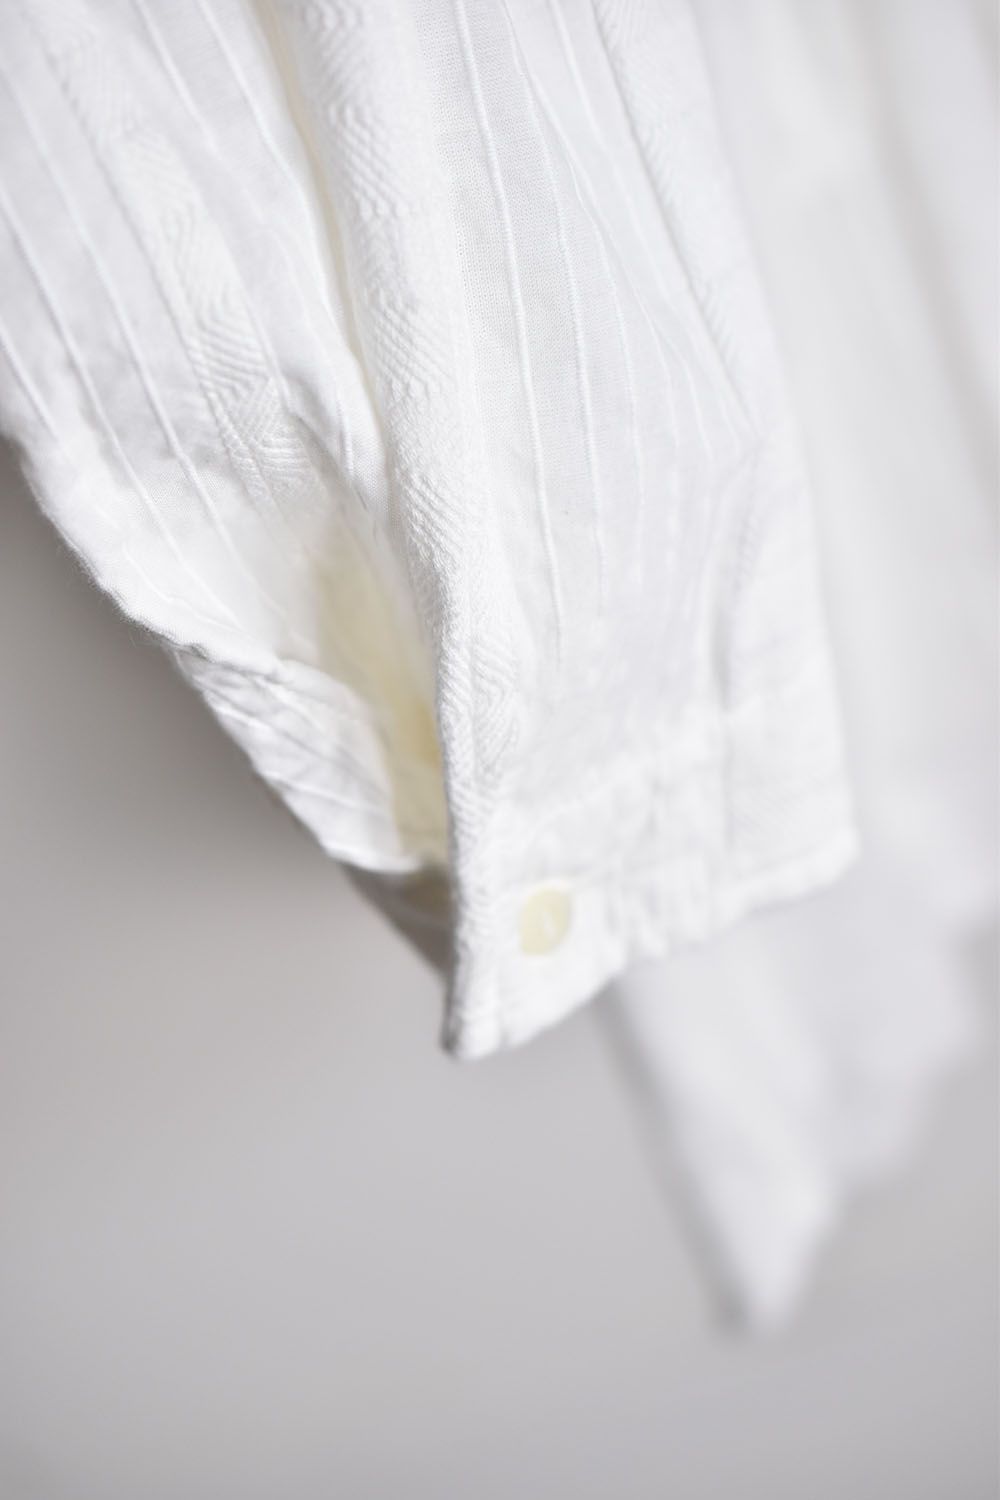 Gament Dyeing Oversized Long Shirts"White"/ ガーメントダイオーバーサイズロングシャツ"ホワイト"